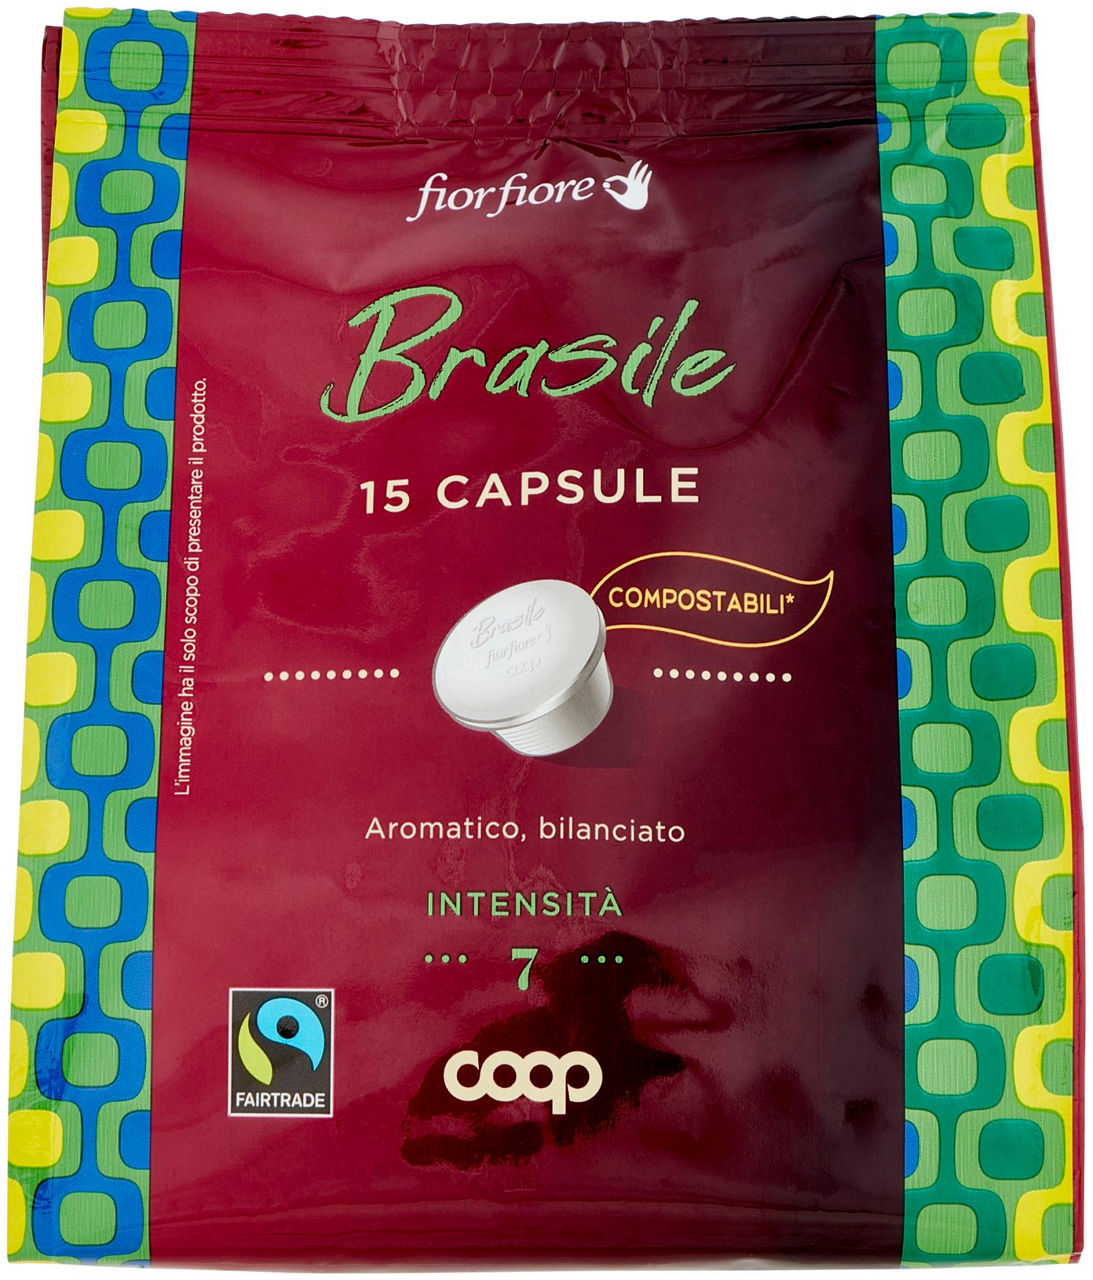 Caffe' cps compostabili fior fiore coop arabica brasile fair trade pz 15x6g g90